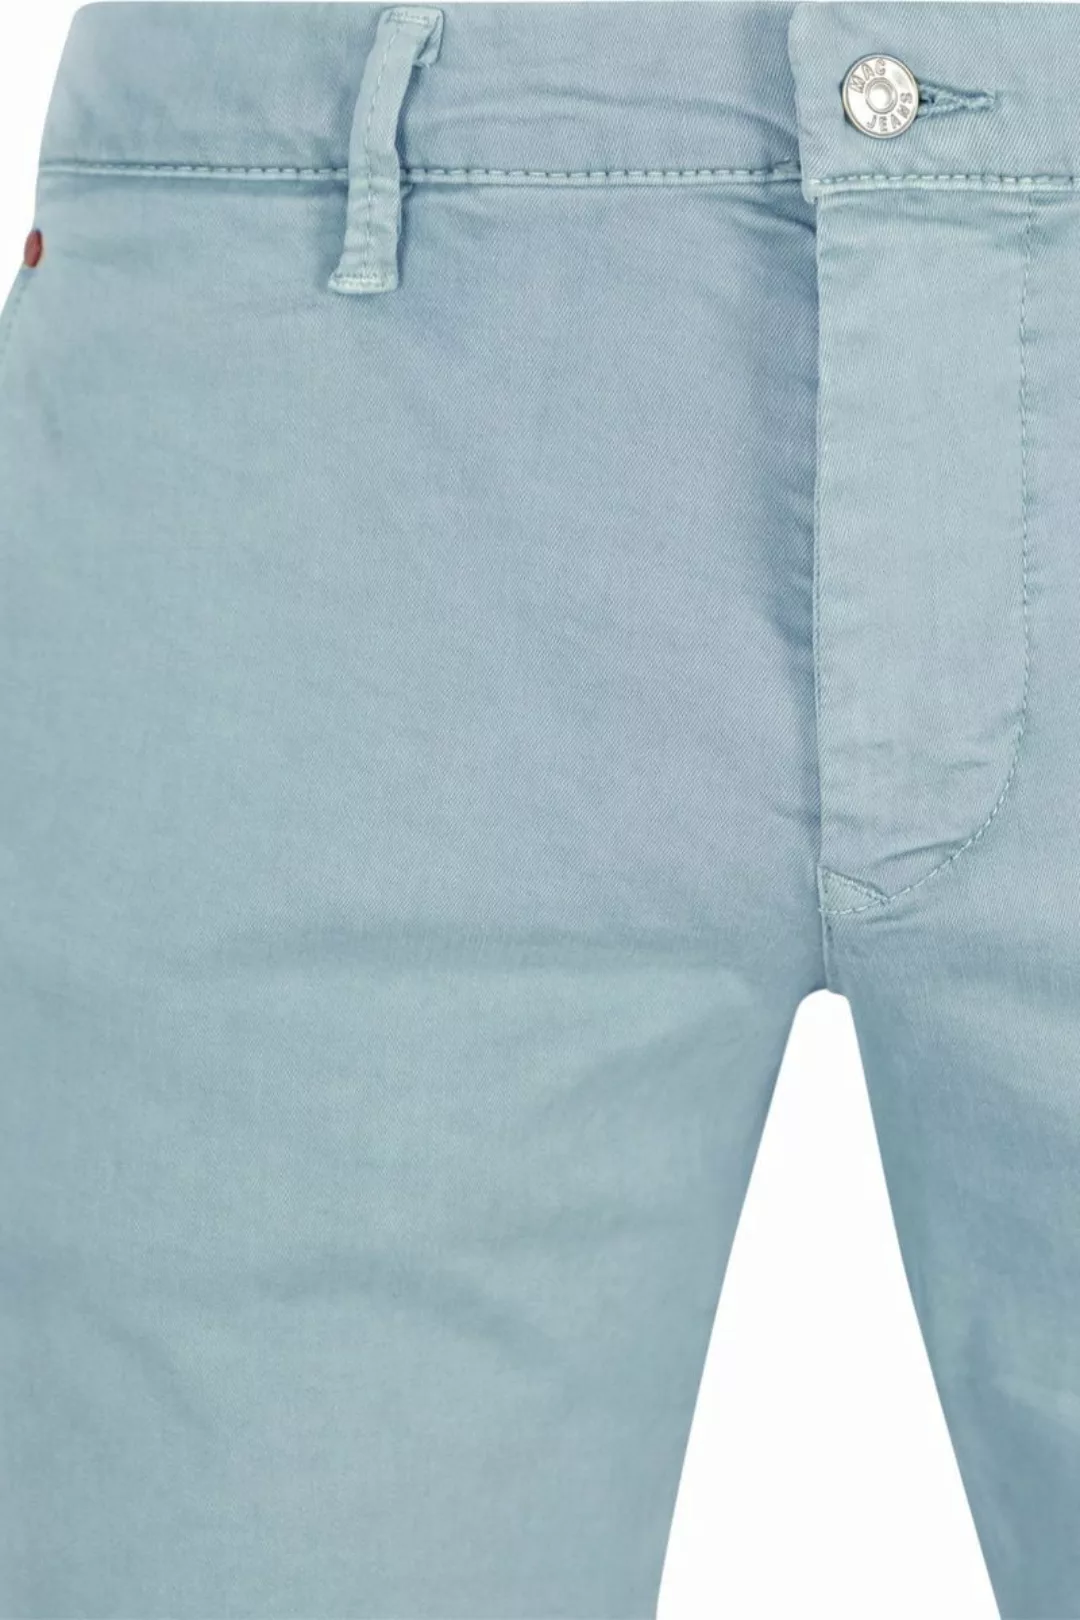 Mac Jeans Driver Pants Hellblau - Größe W 34 - L 34 günstig online kaufen